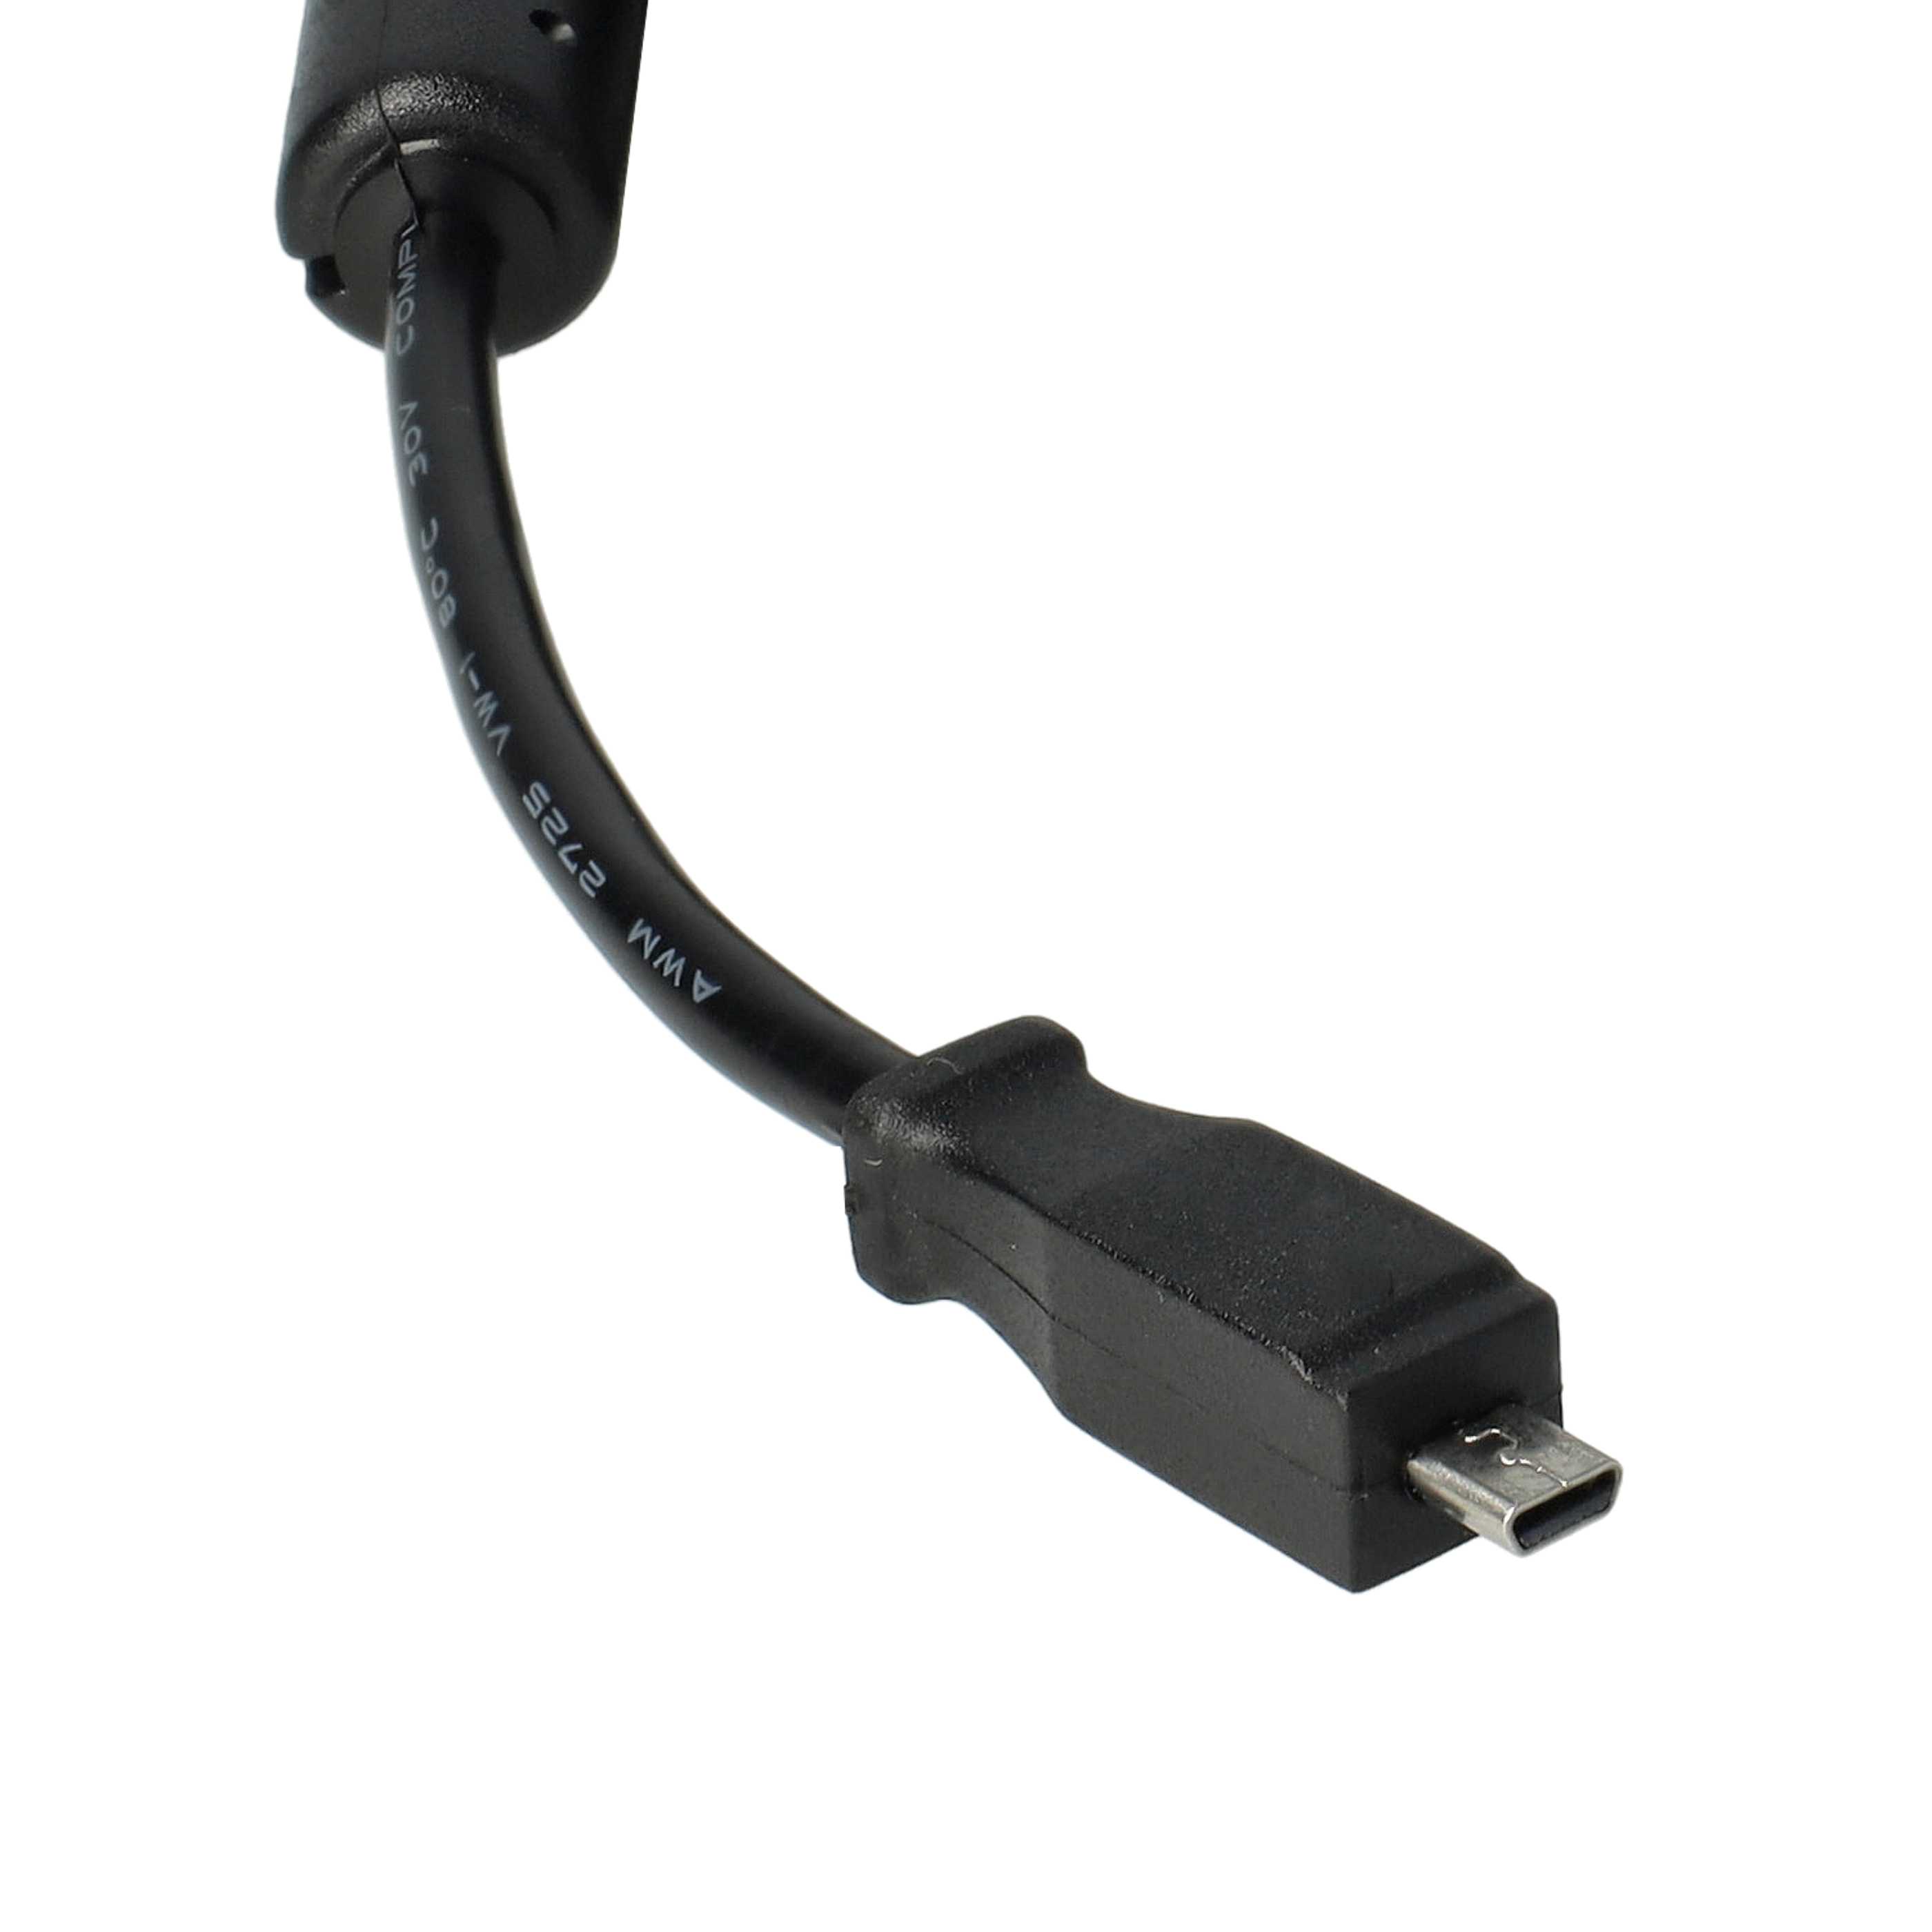 USB Data Cable replaces Kodak U-8 for Kodak Camera - 150 cm